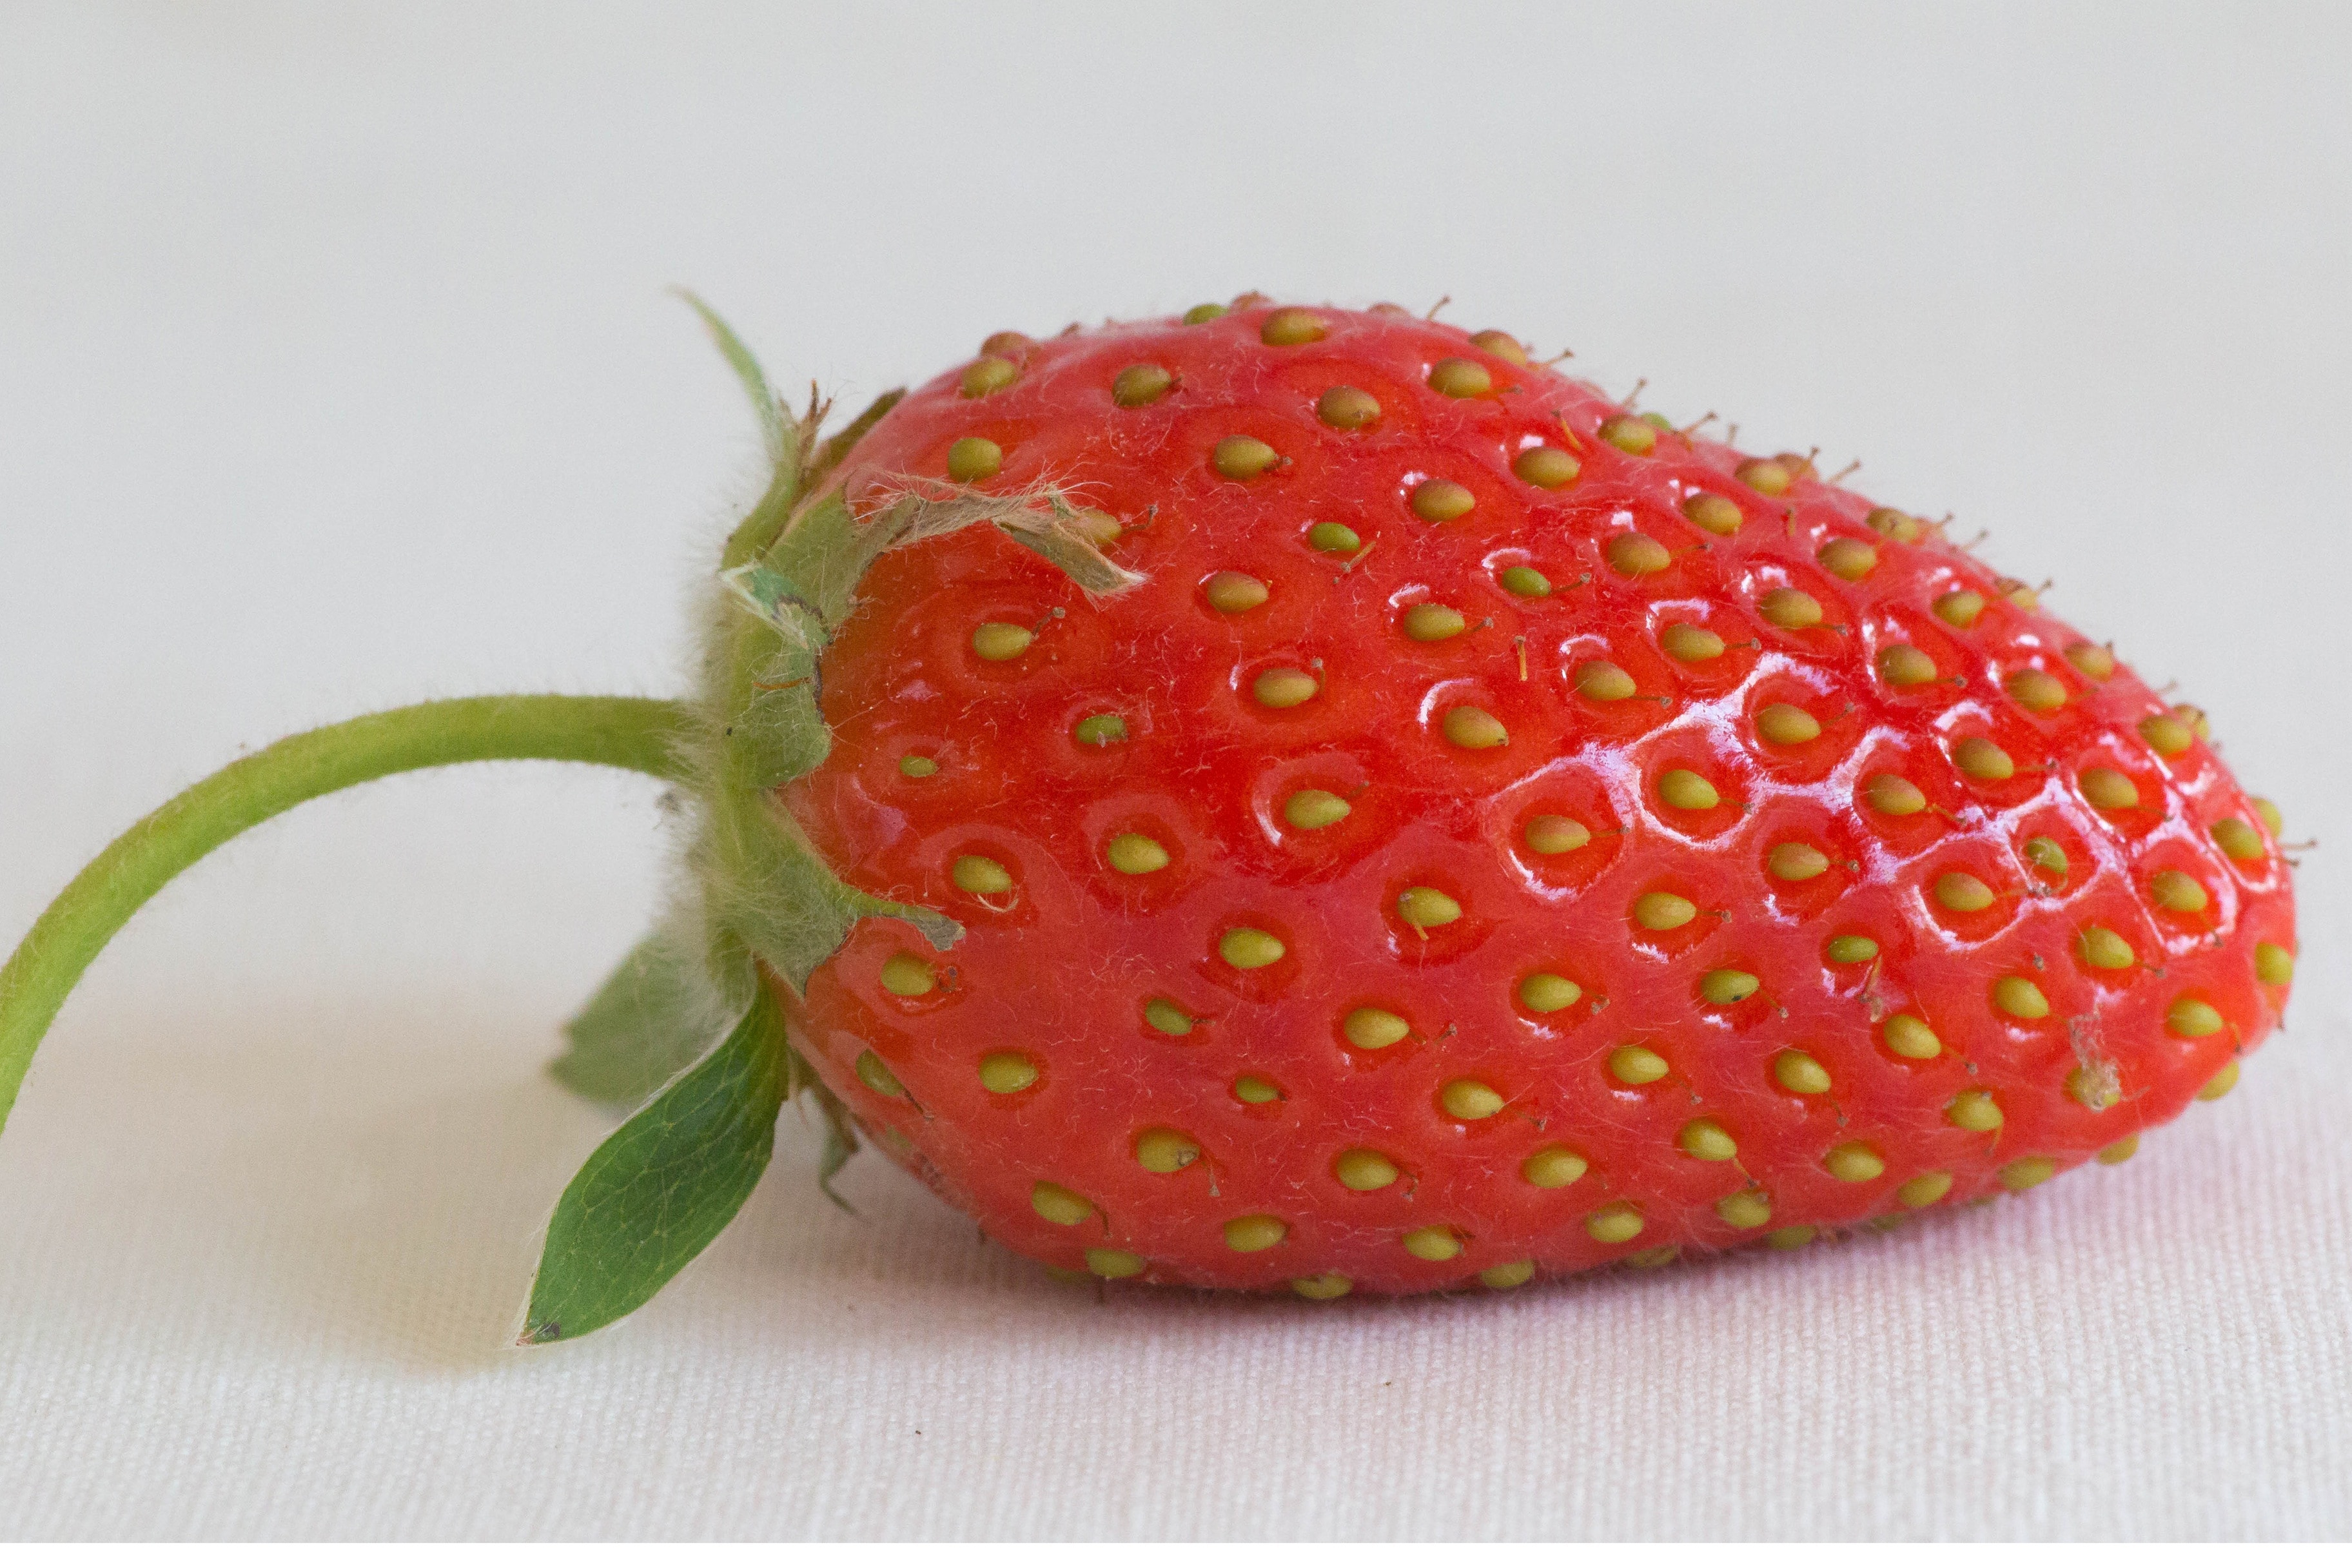 red strawberry